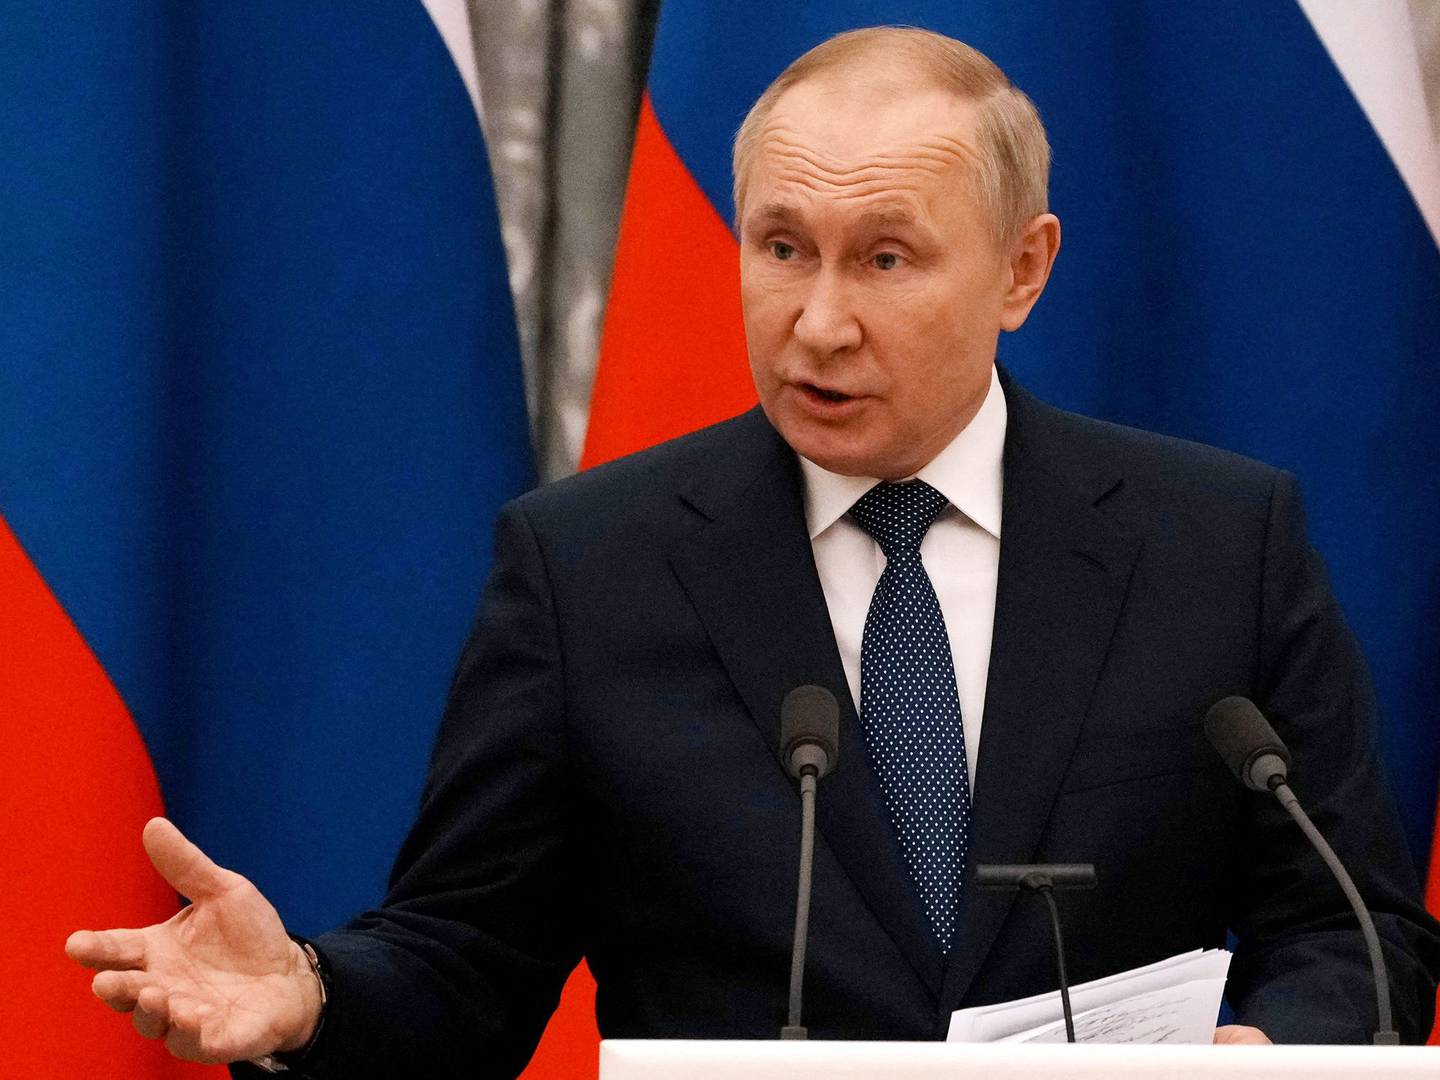 El presidente ruso, Vladimir Putin. Fotógrafo: Thibault Camus/AFP/Getty Images